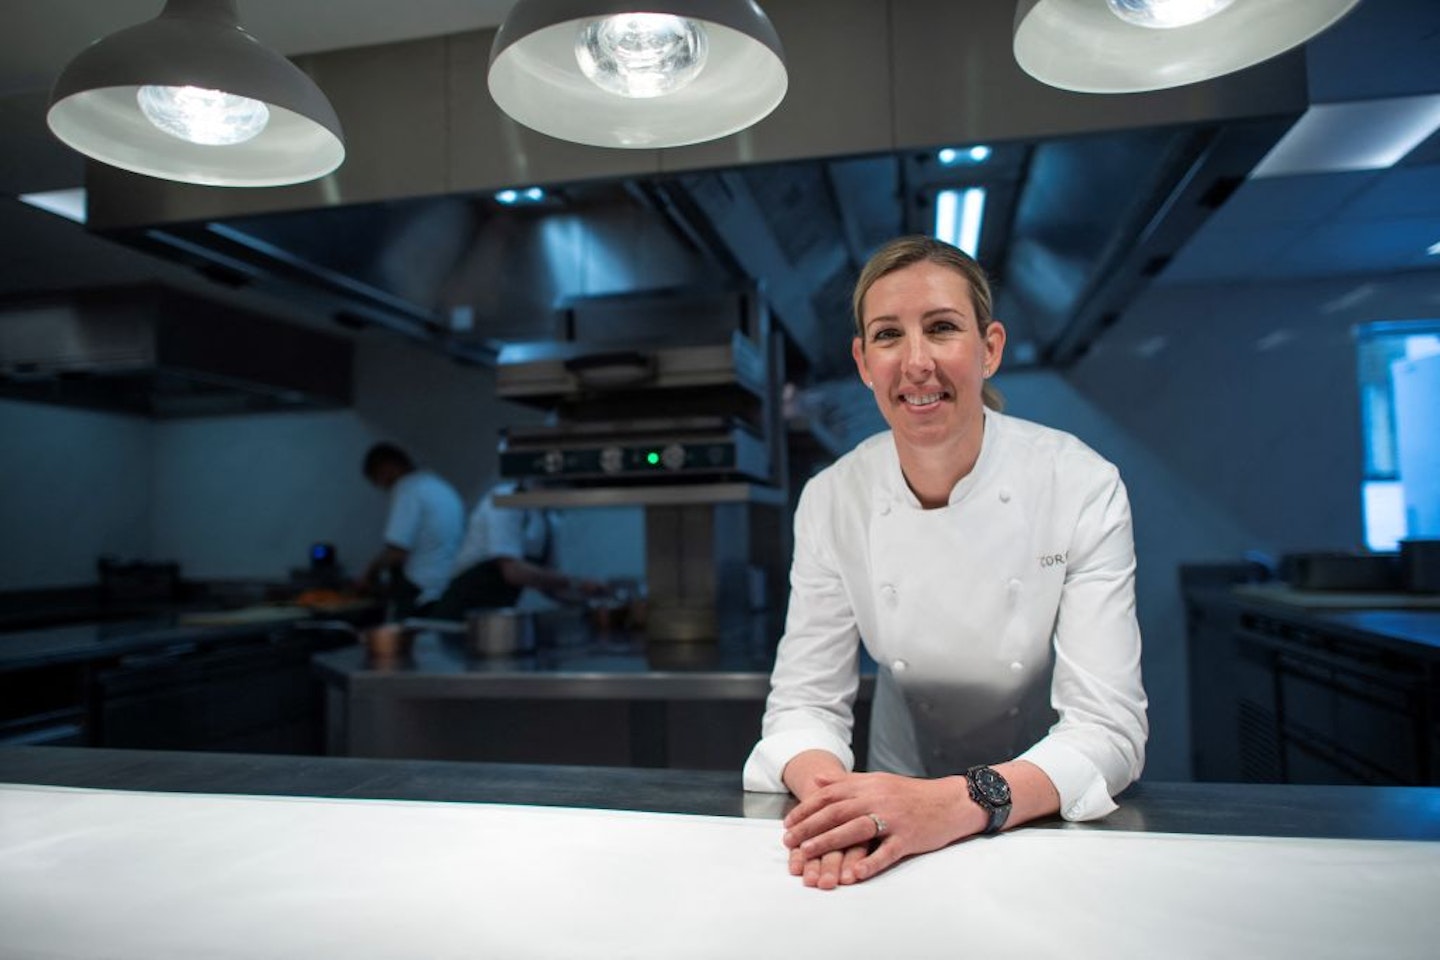 female TV chef Clare Smyth